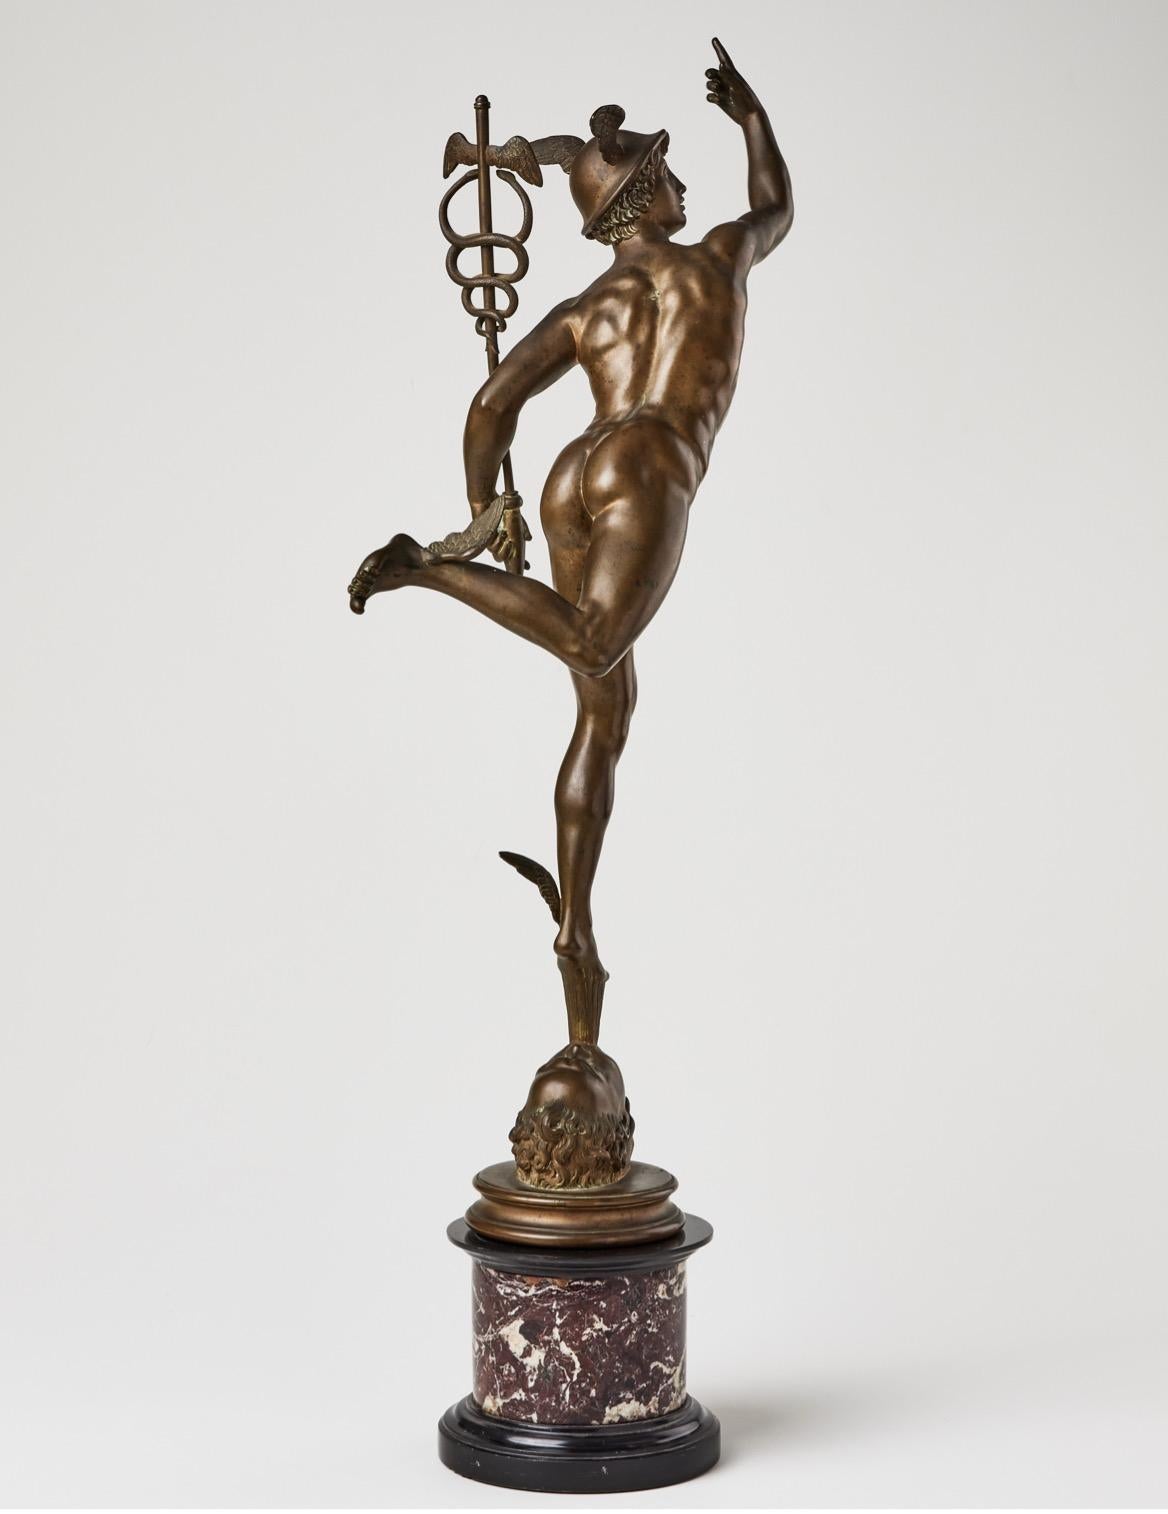 Italian 19th Century Grand Tour Mercury Bronze Sculpture after Giambologna by Benedetto 